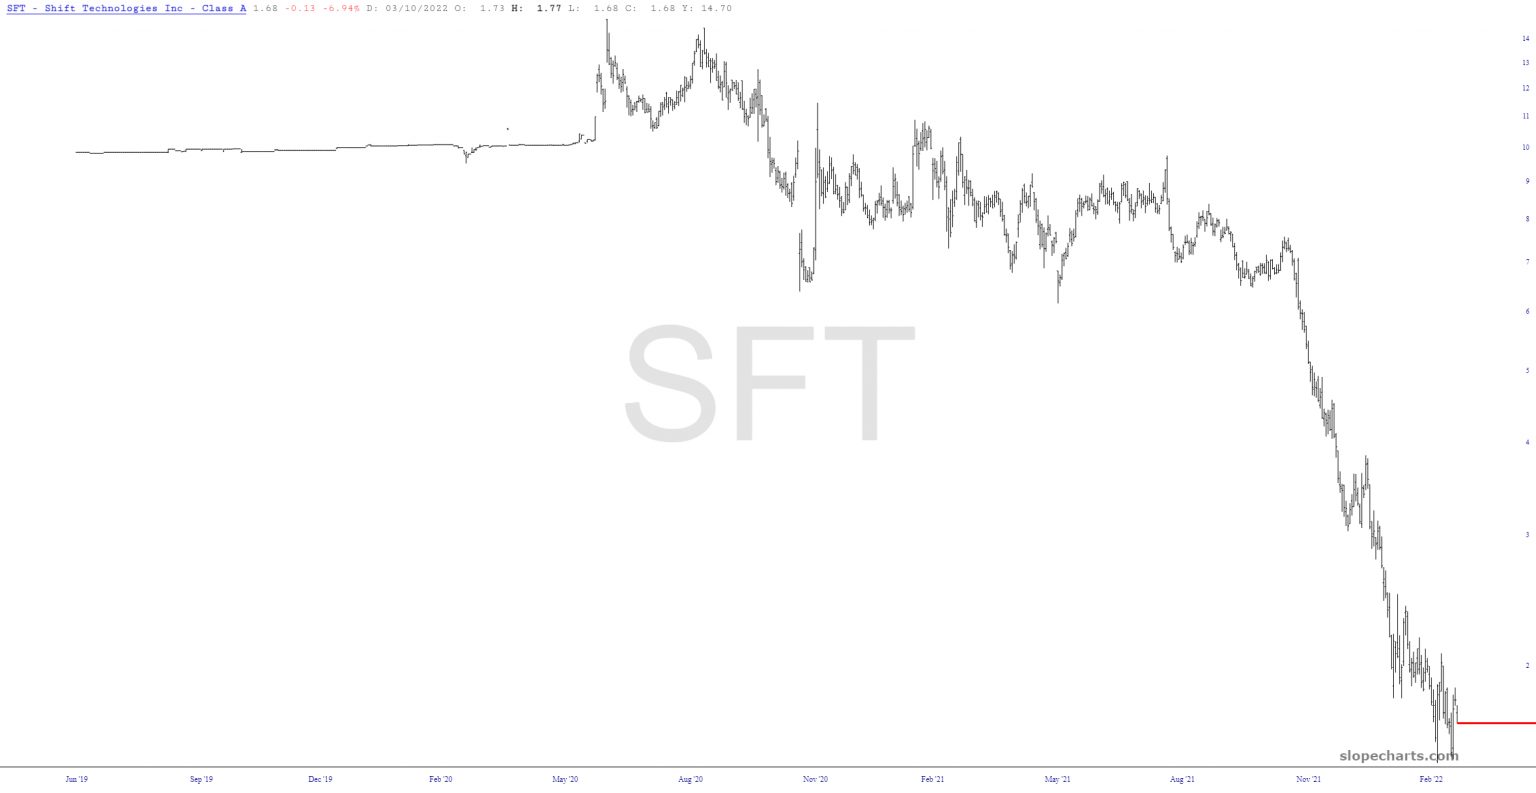 Long-Term SFT Chart.